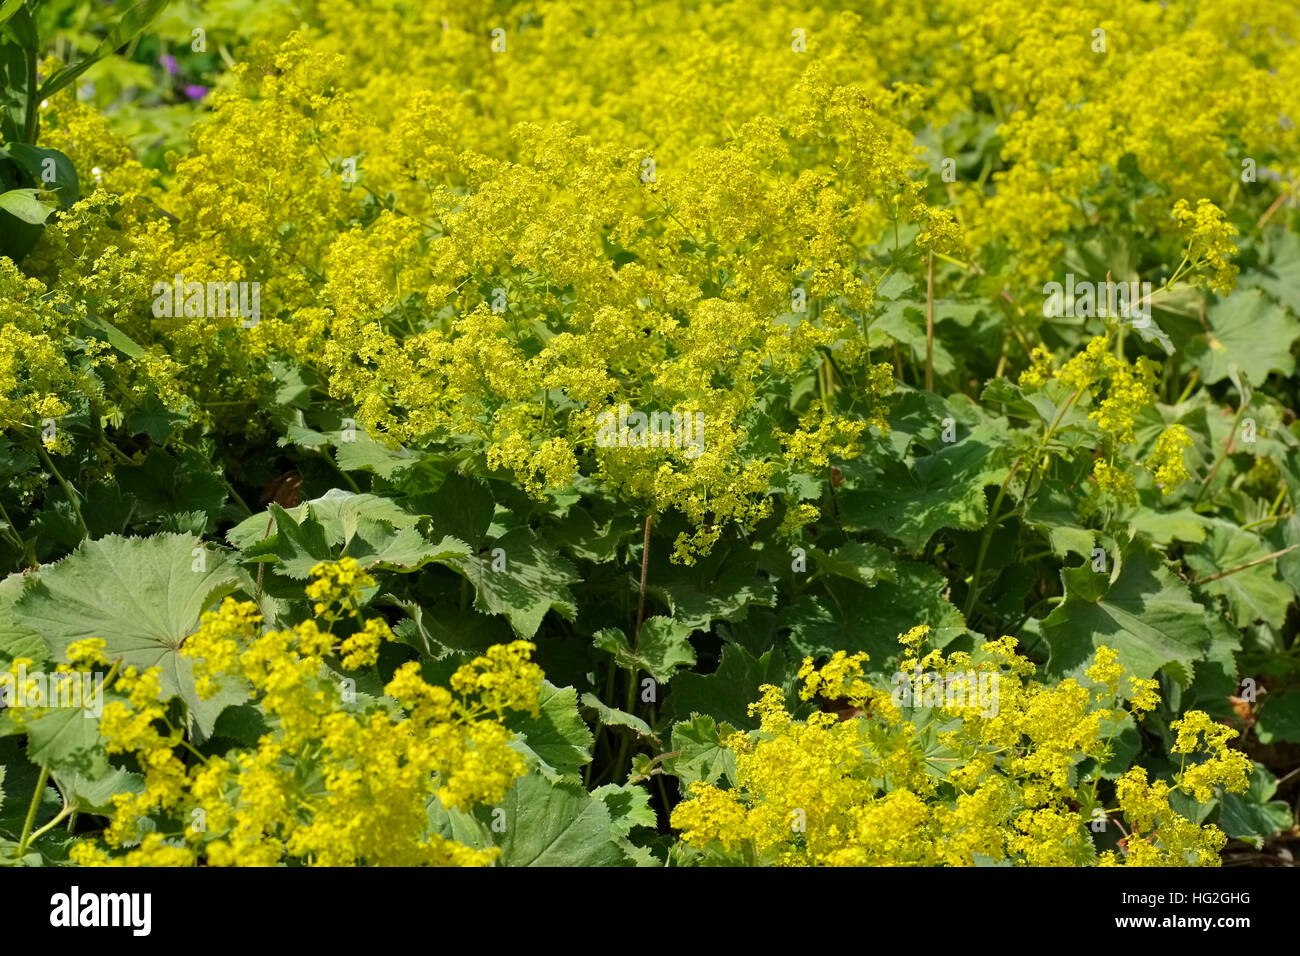 die Heilpflanze Frauenmantel - the herbal plant ladys-mantle or Alchemilla mollis Stock Photo